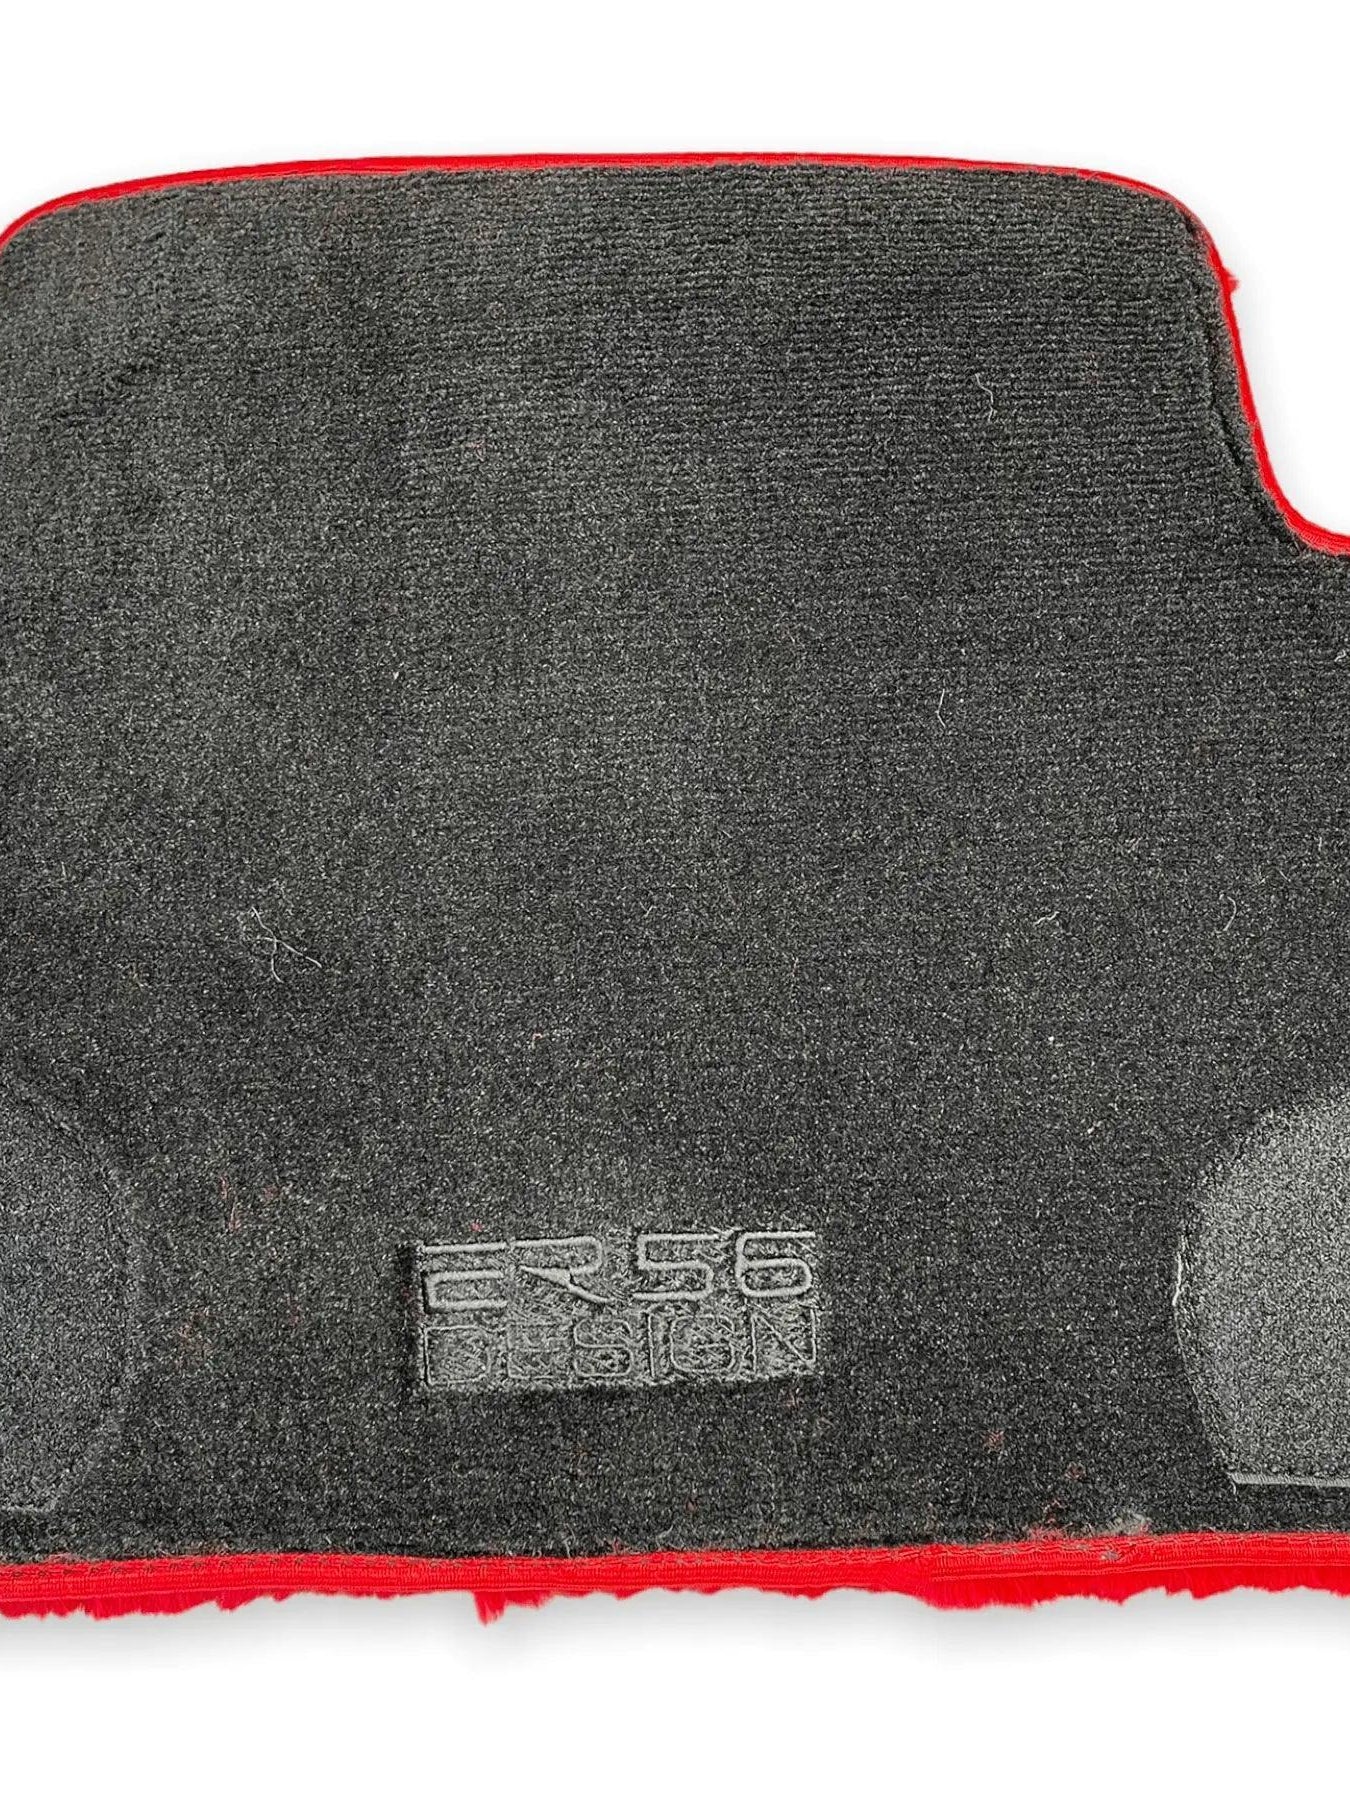 Red Sheepskin Floor Mats For Bentley Flying Spur (2013-2019) Er56 Design Brand - AutoWin